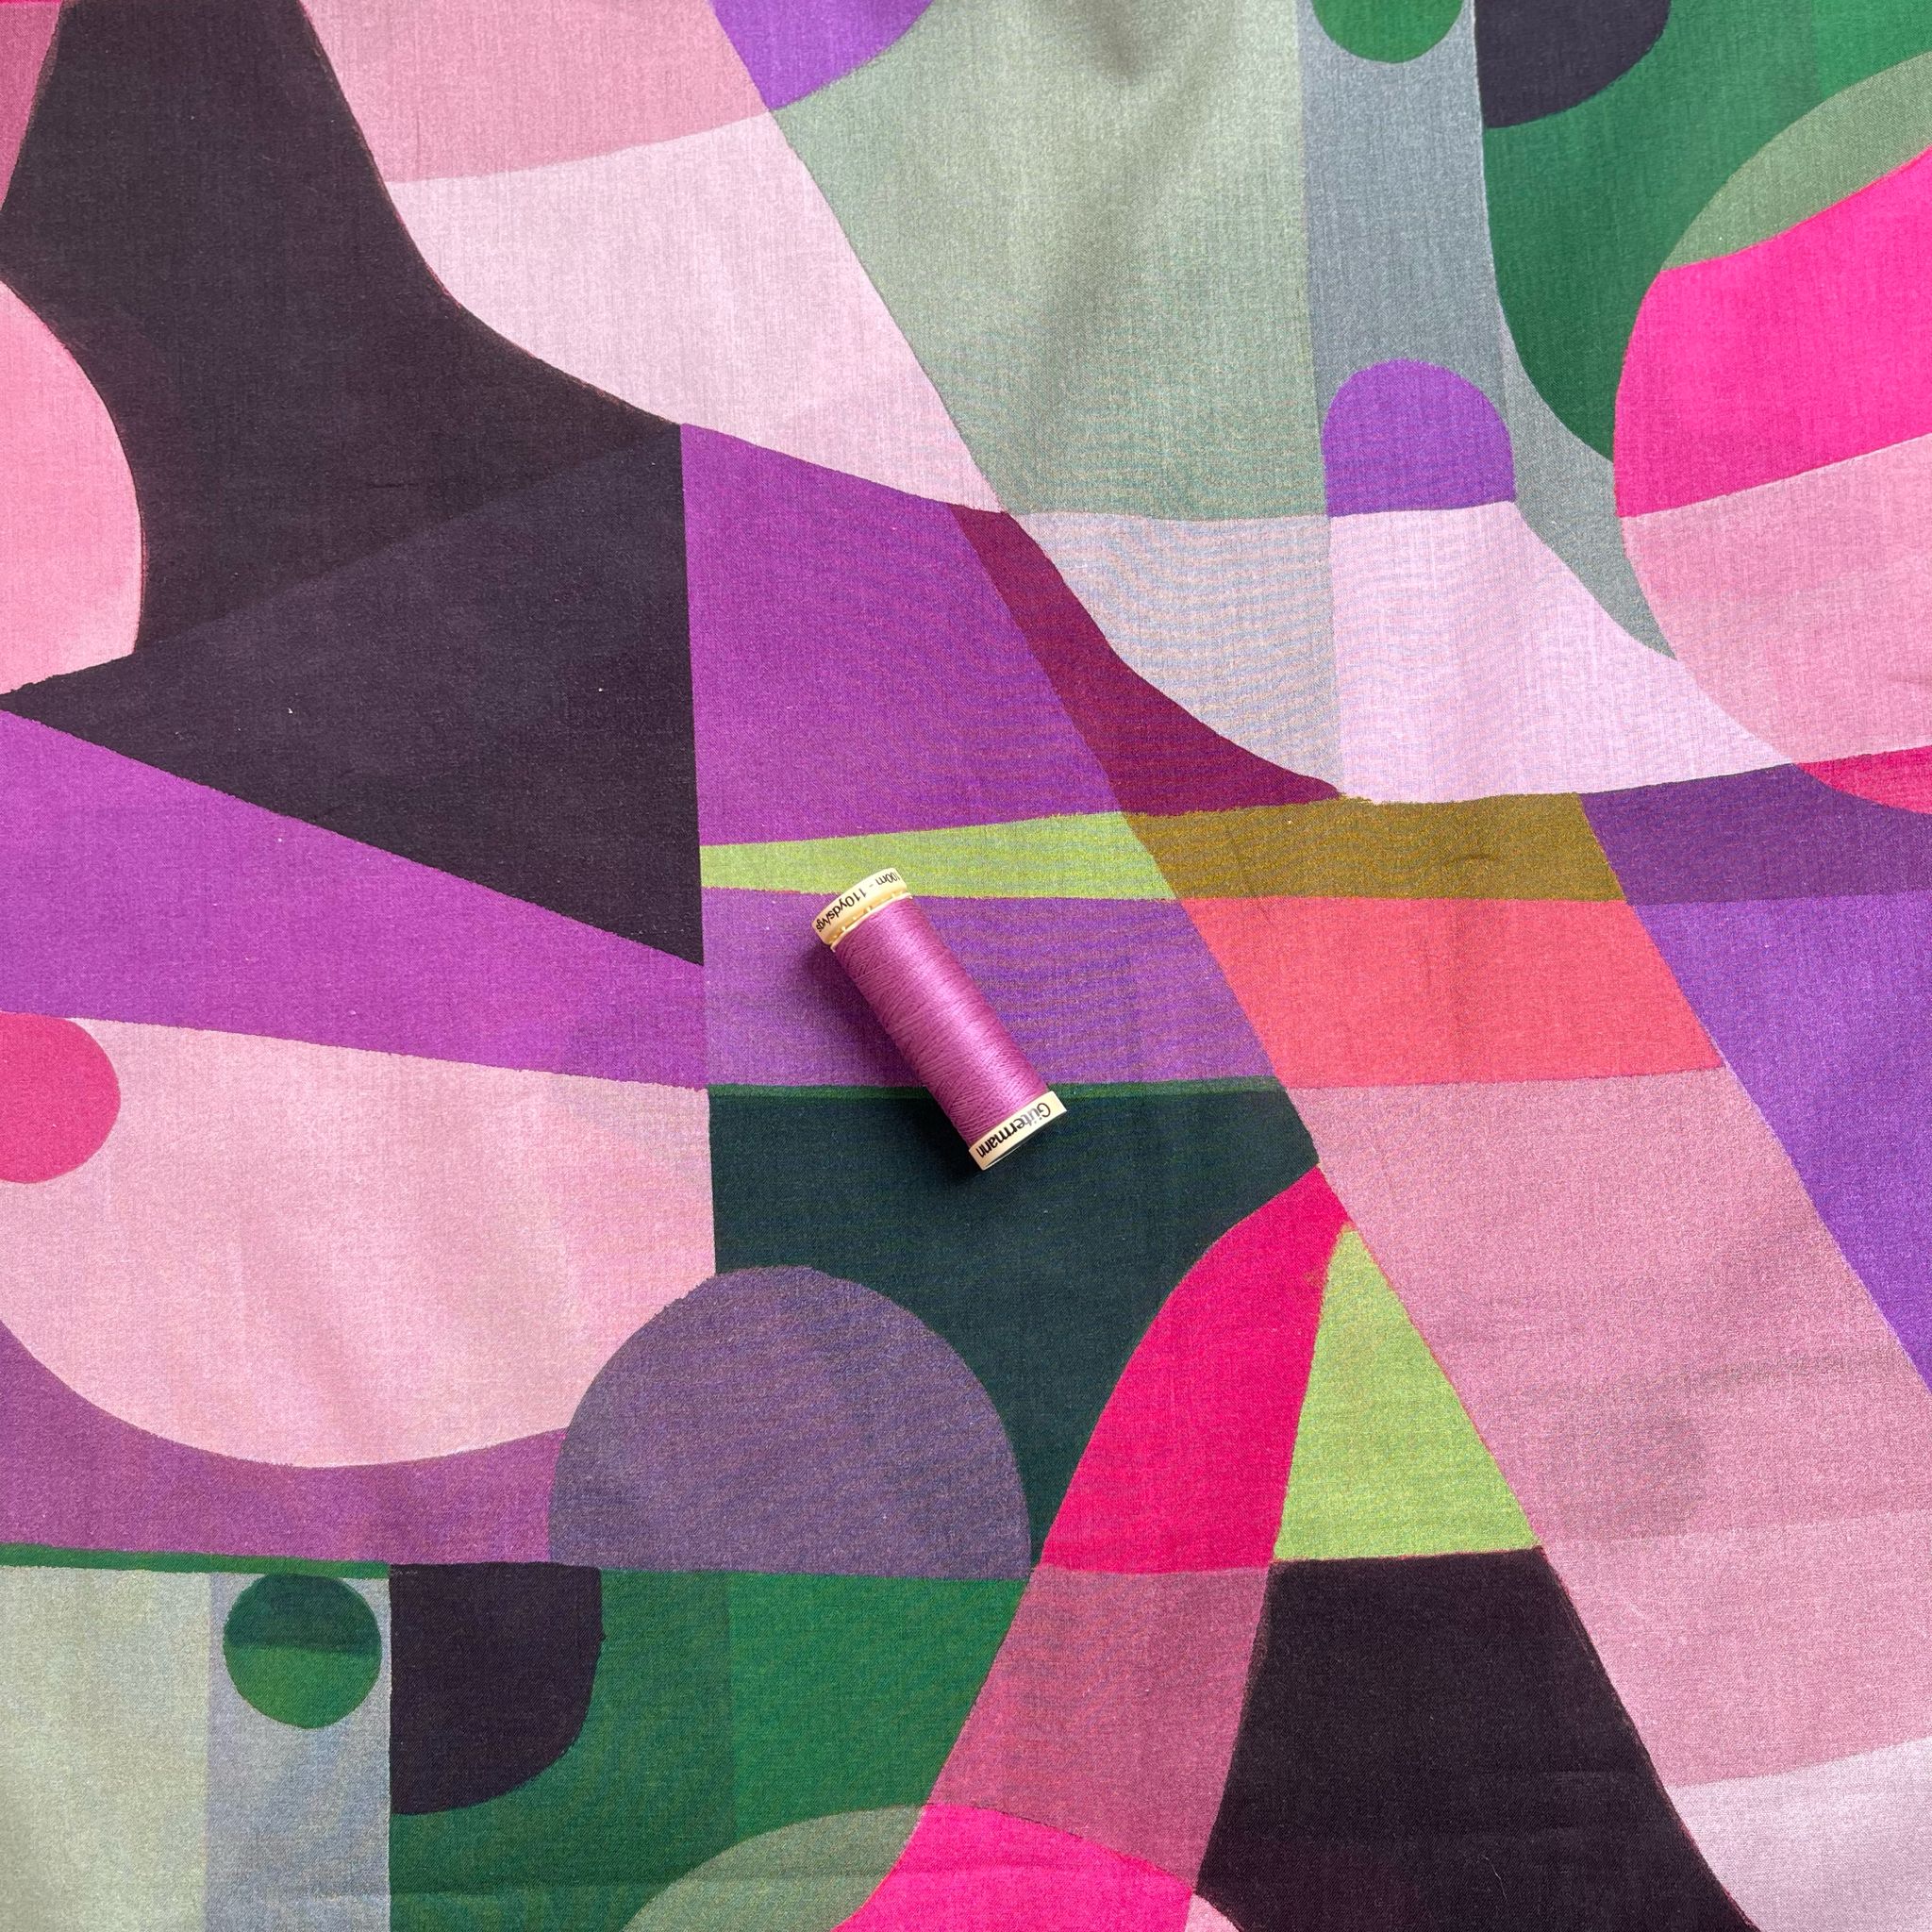 Nerida Hansen - Midnight Summer Swim Purple Cotton Voile Fabric